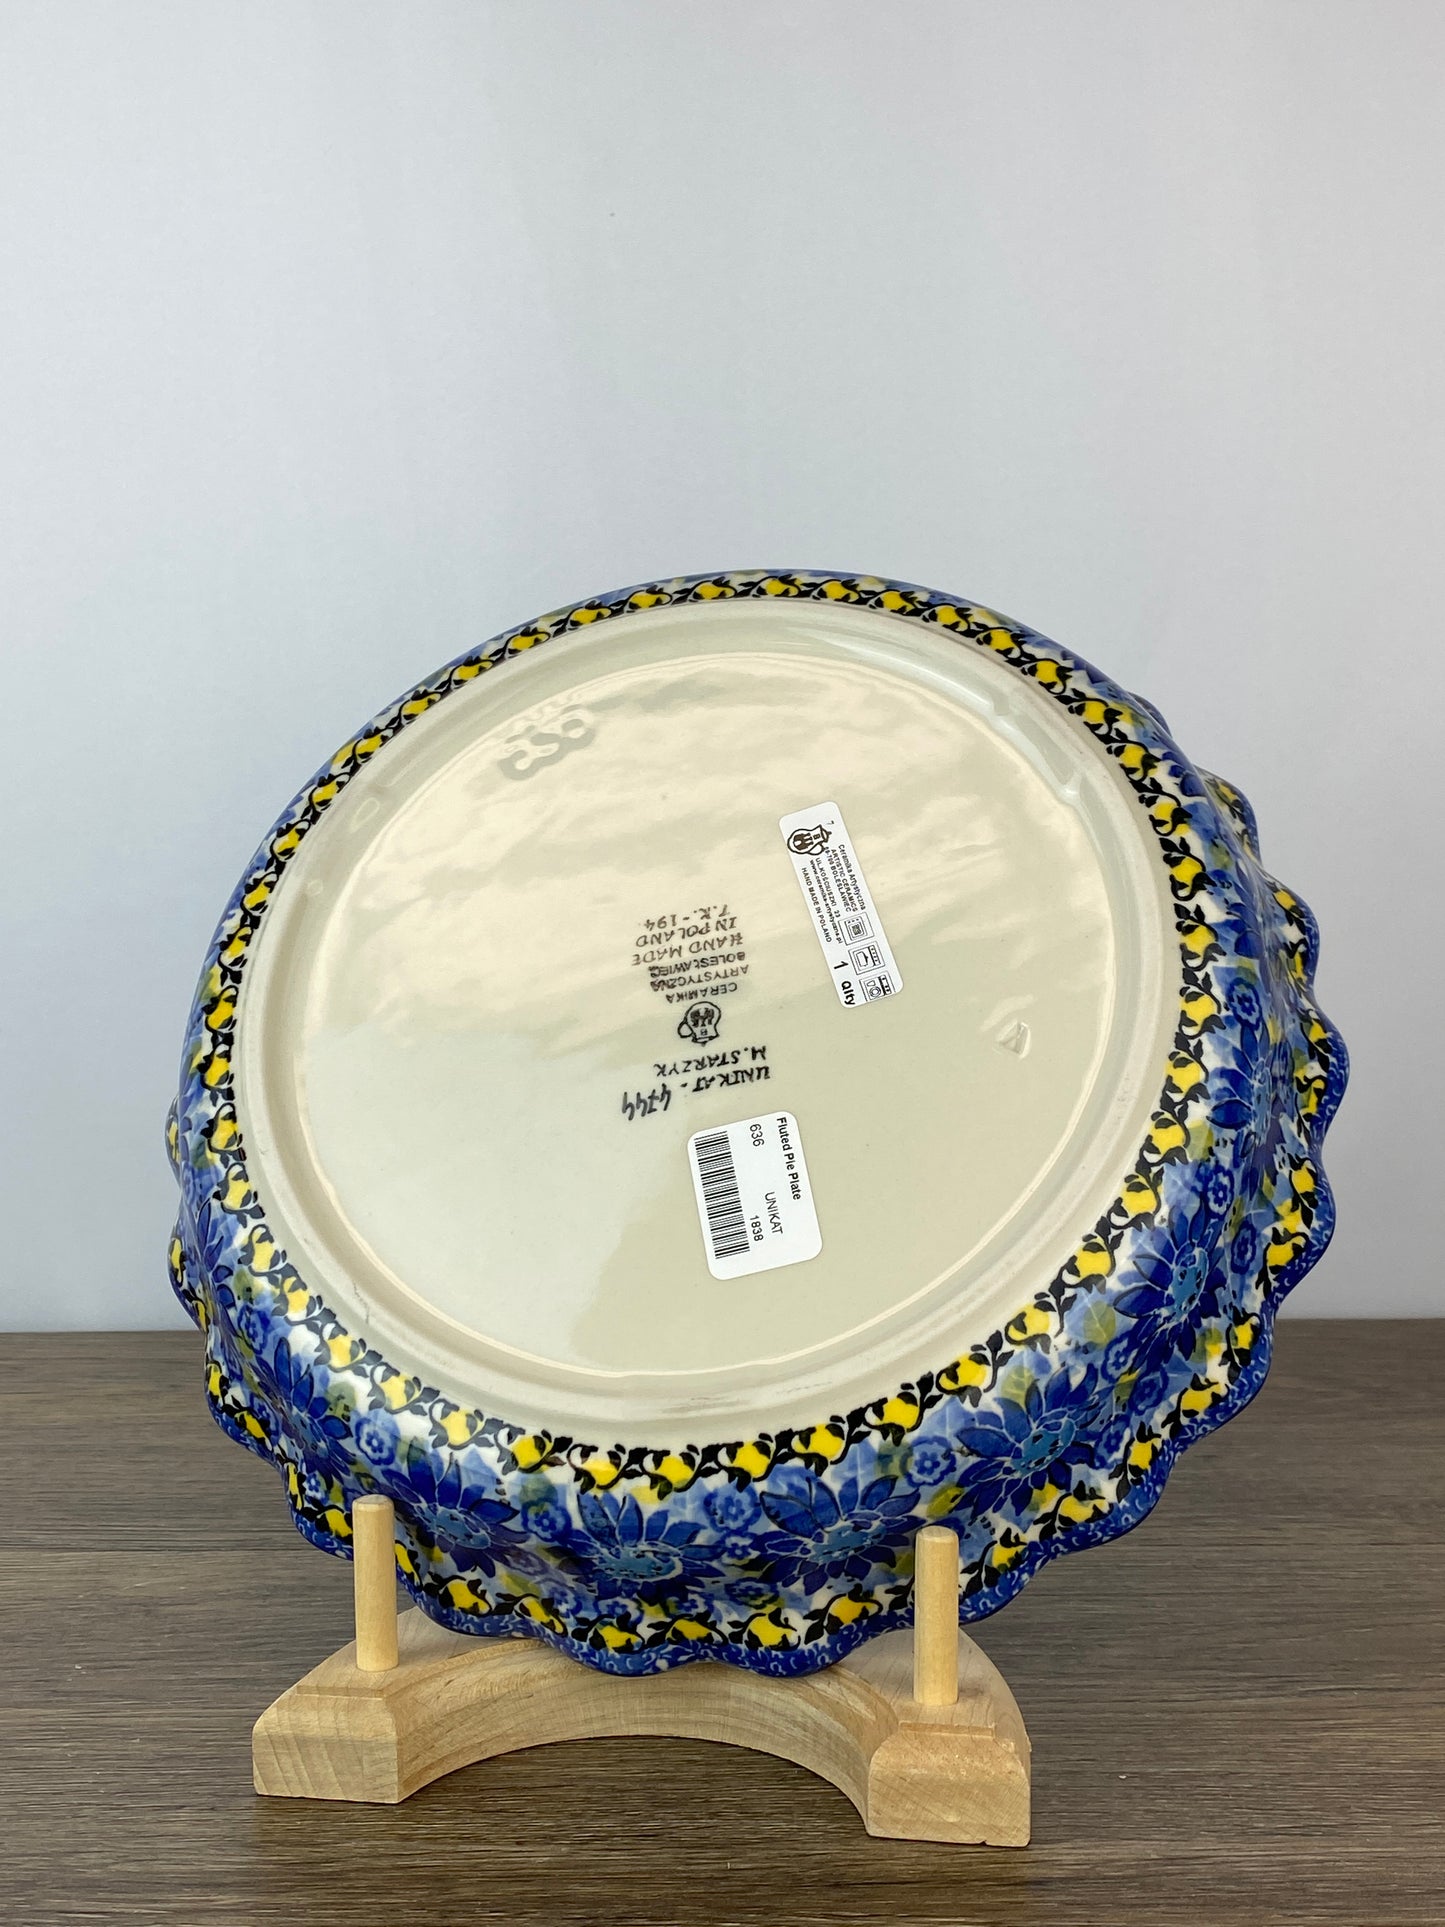 Ruffled Unikat Pie Plate / Round Baker - Shape 636 Pattern U4744